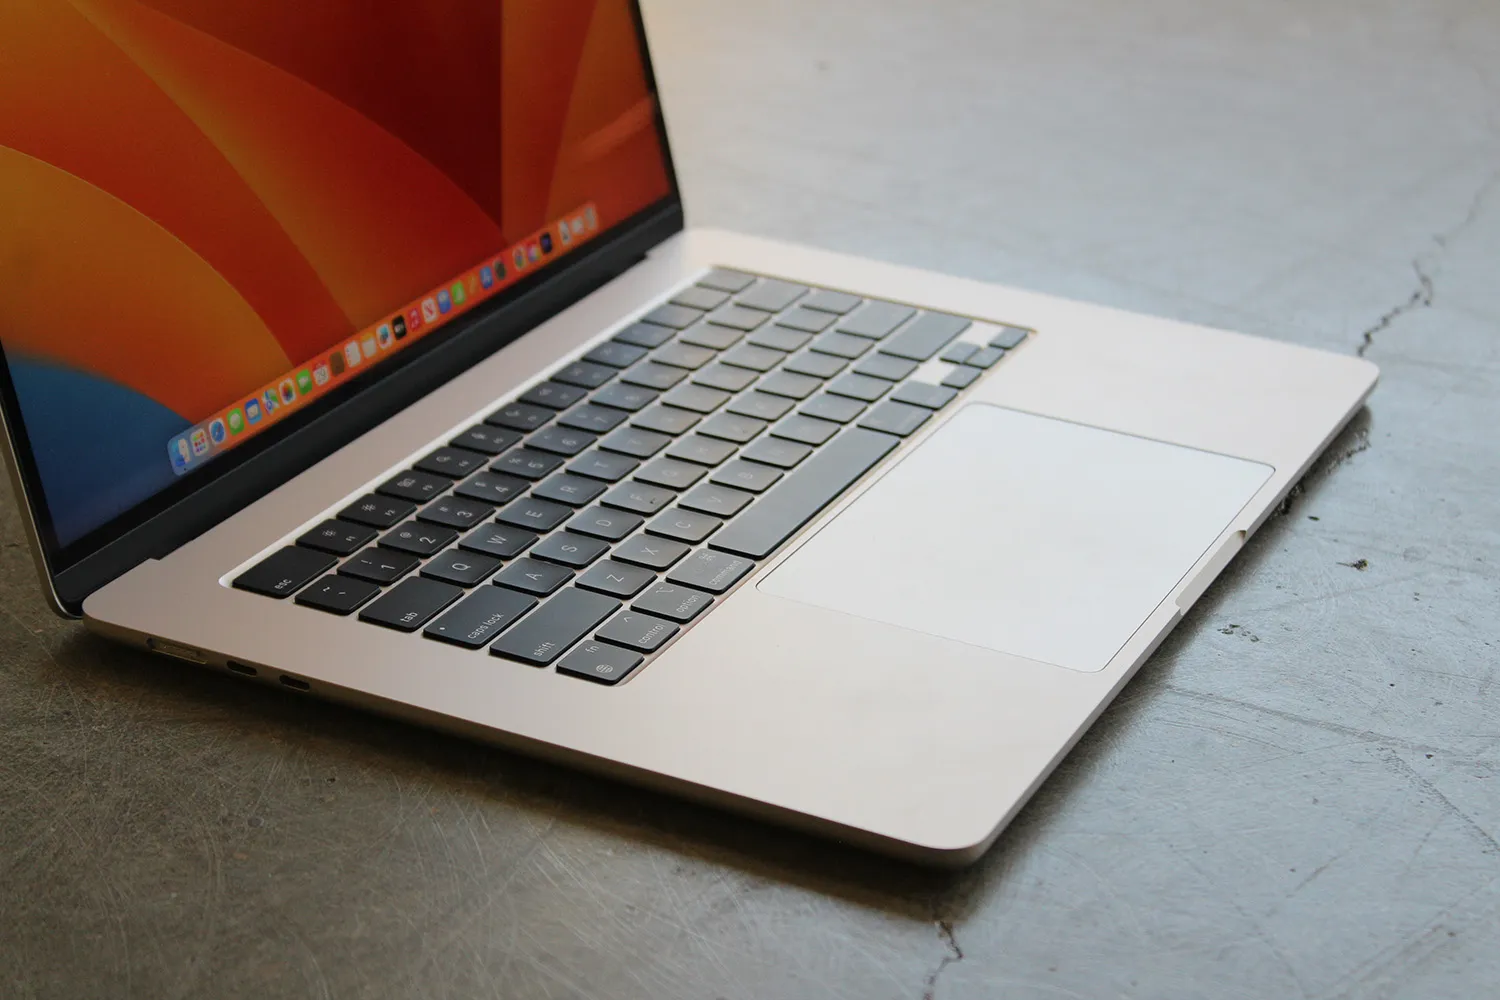 Клавиатура и тачпад на 15-дюймовом MacBook Air от Apple.